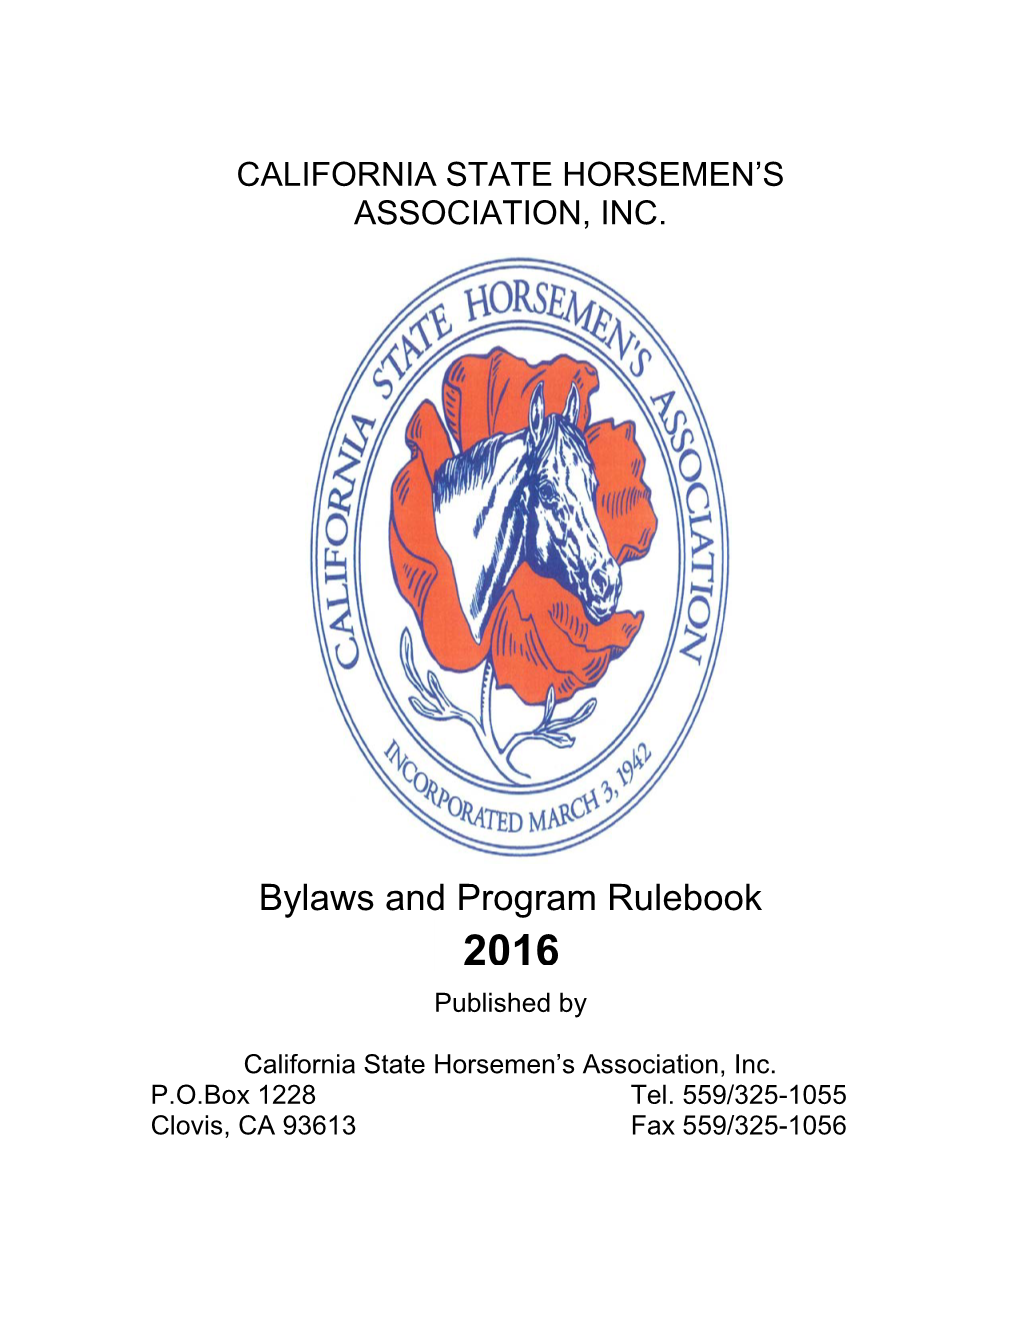 California State Horsemen's Association, Incorporated